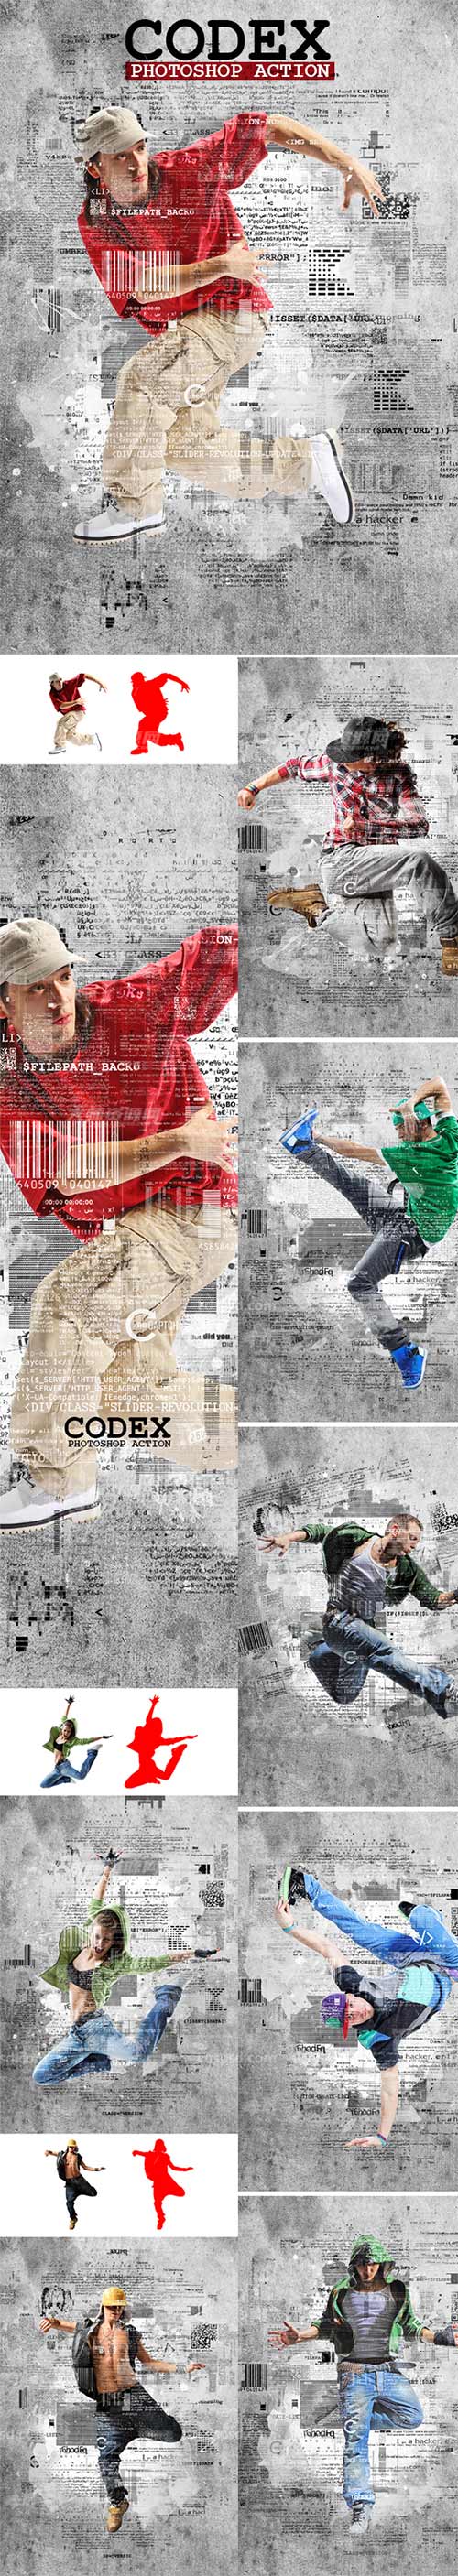 Codex Action,极品PS动作－图文混叠